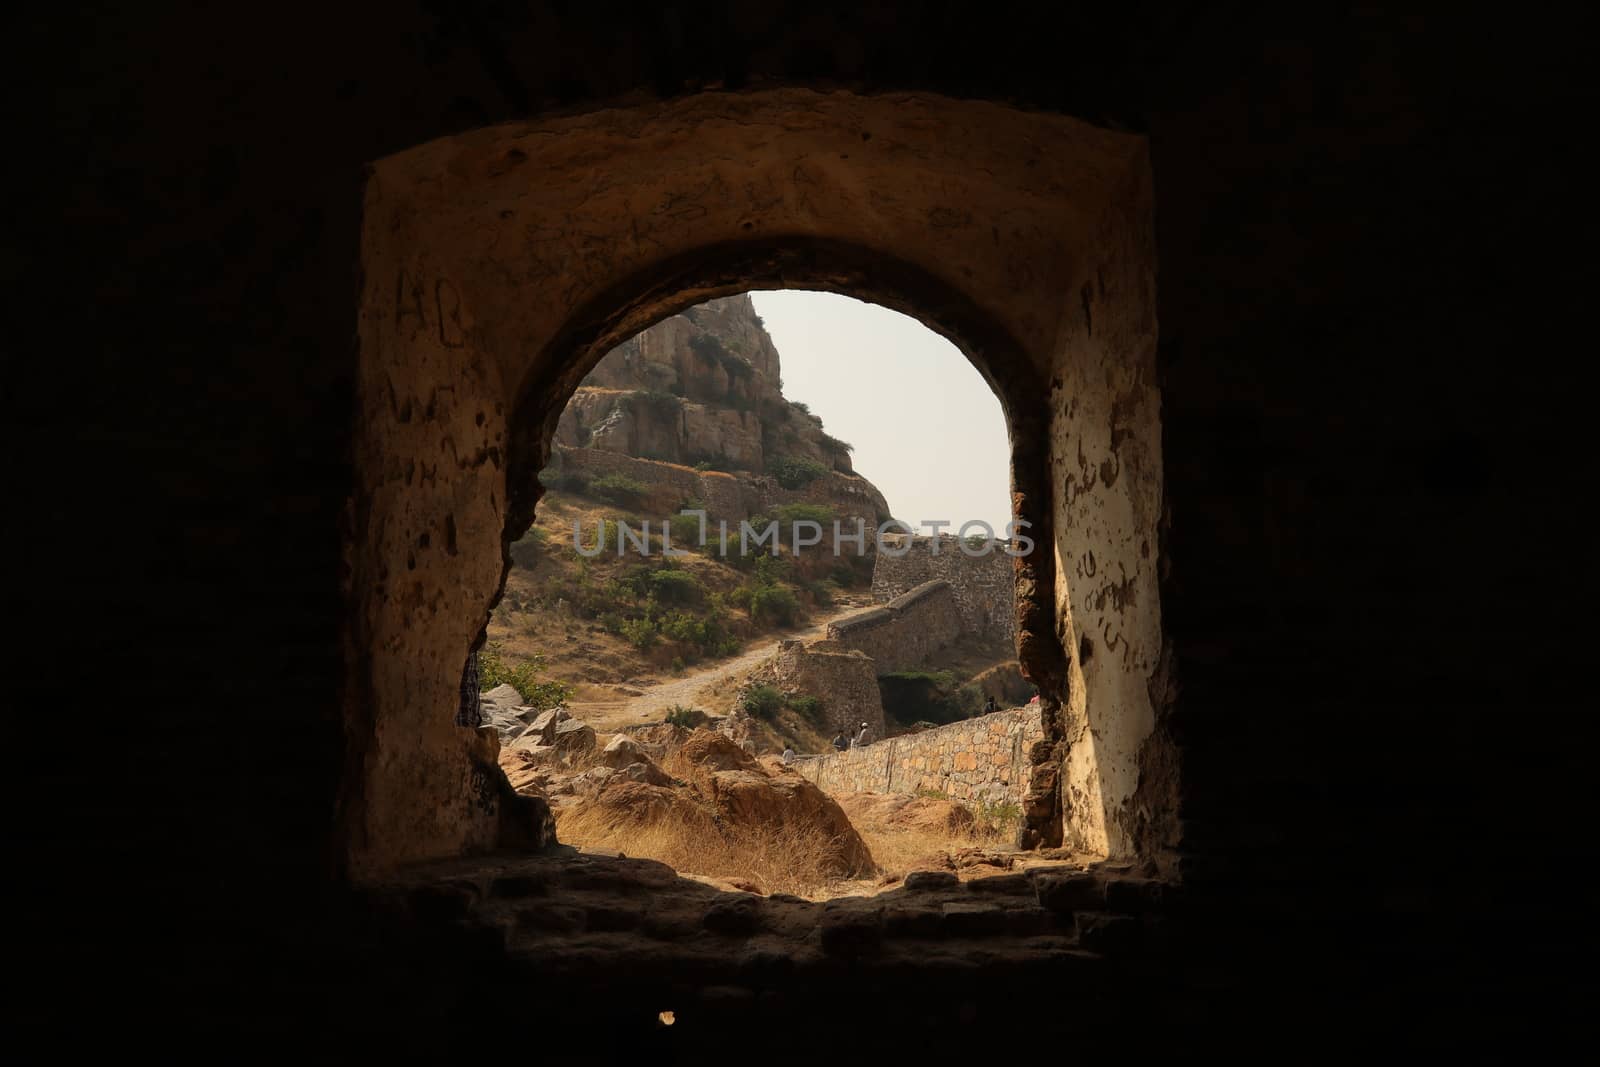 Heritage Fort Rajasthan India